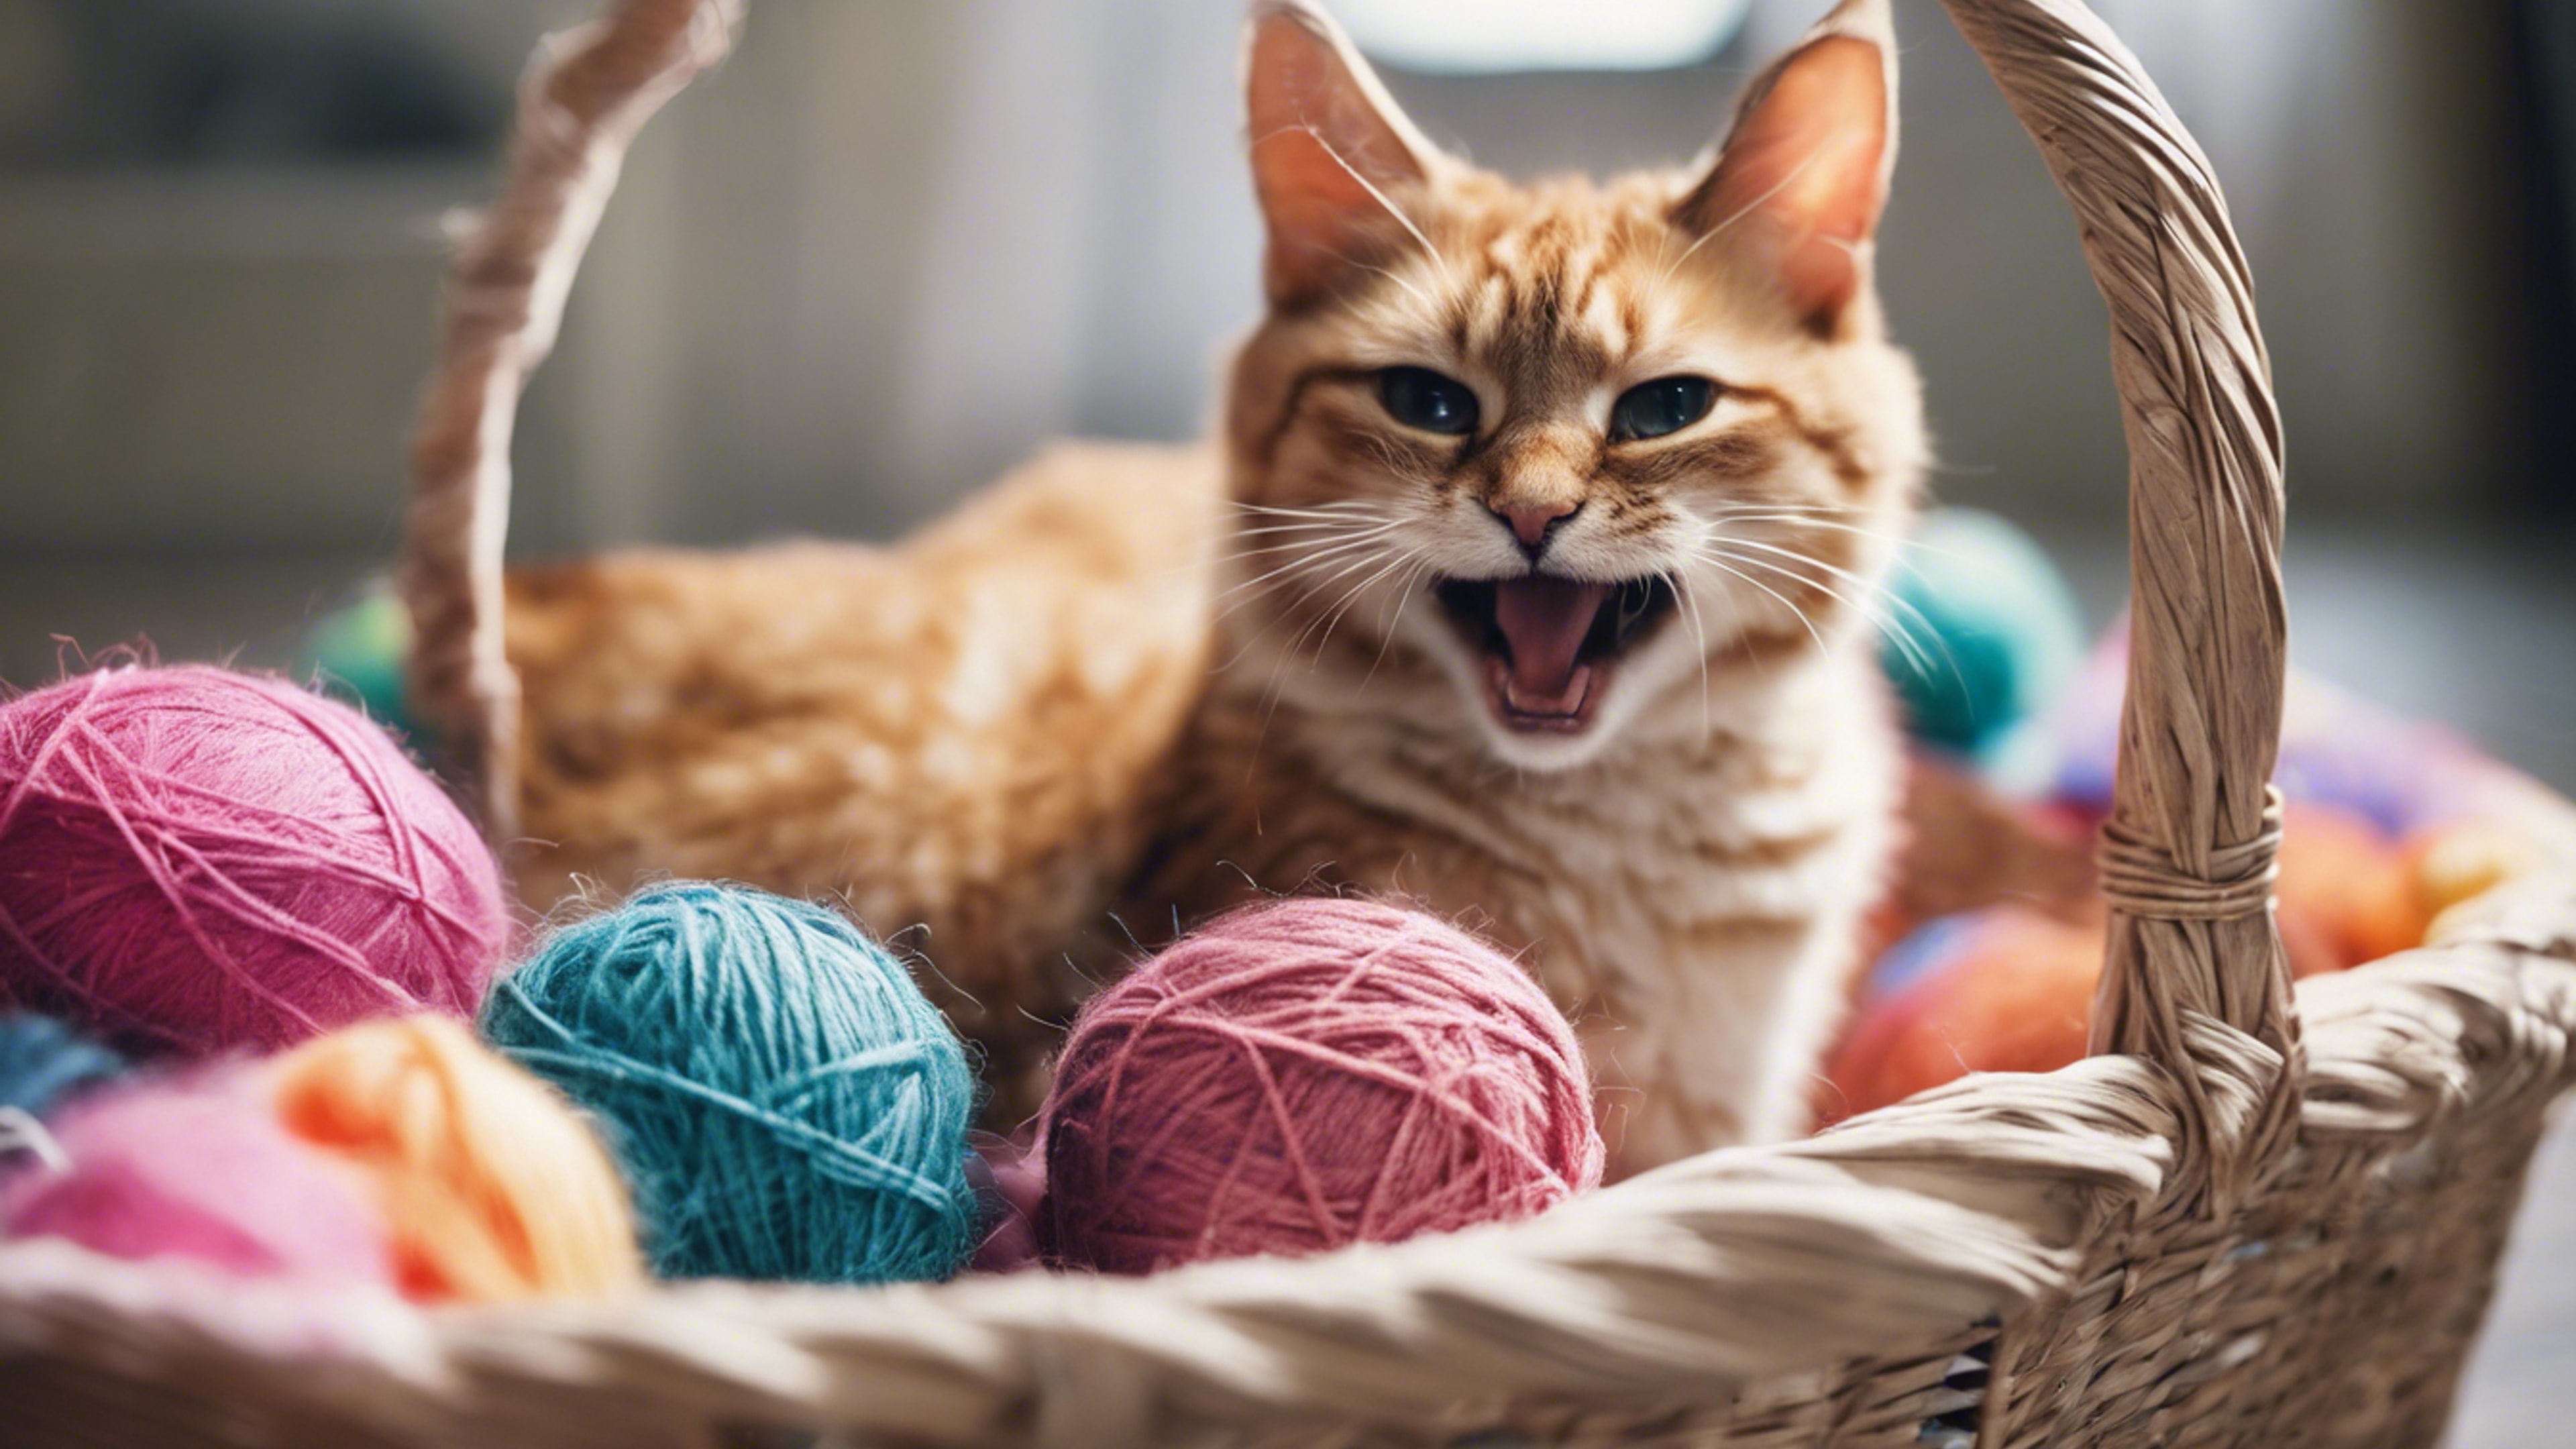 A cat mid-yawn in a basket filled with soft, colorful balls of yarn. Divar kağızı[4de2b2f4a75d42f7bbf8]